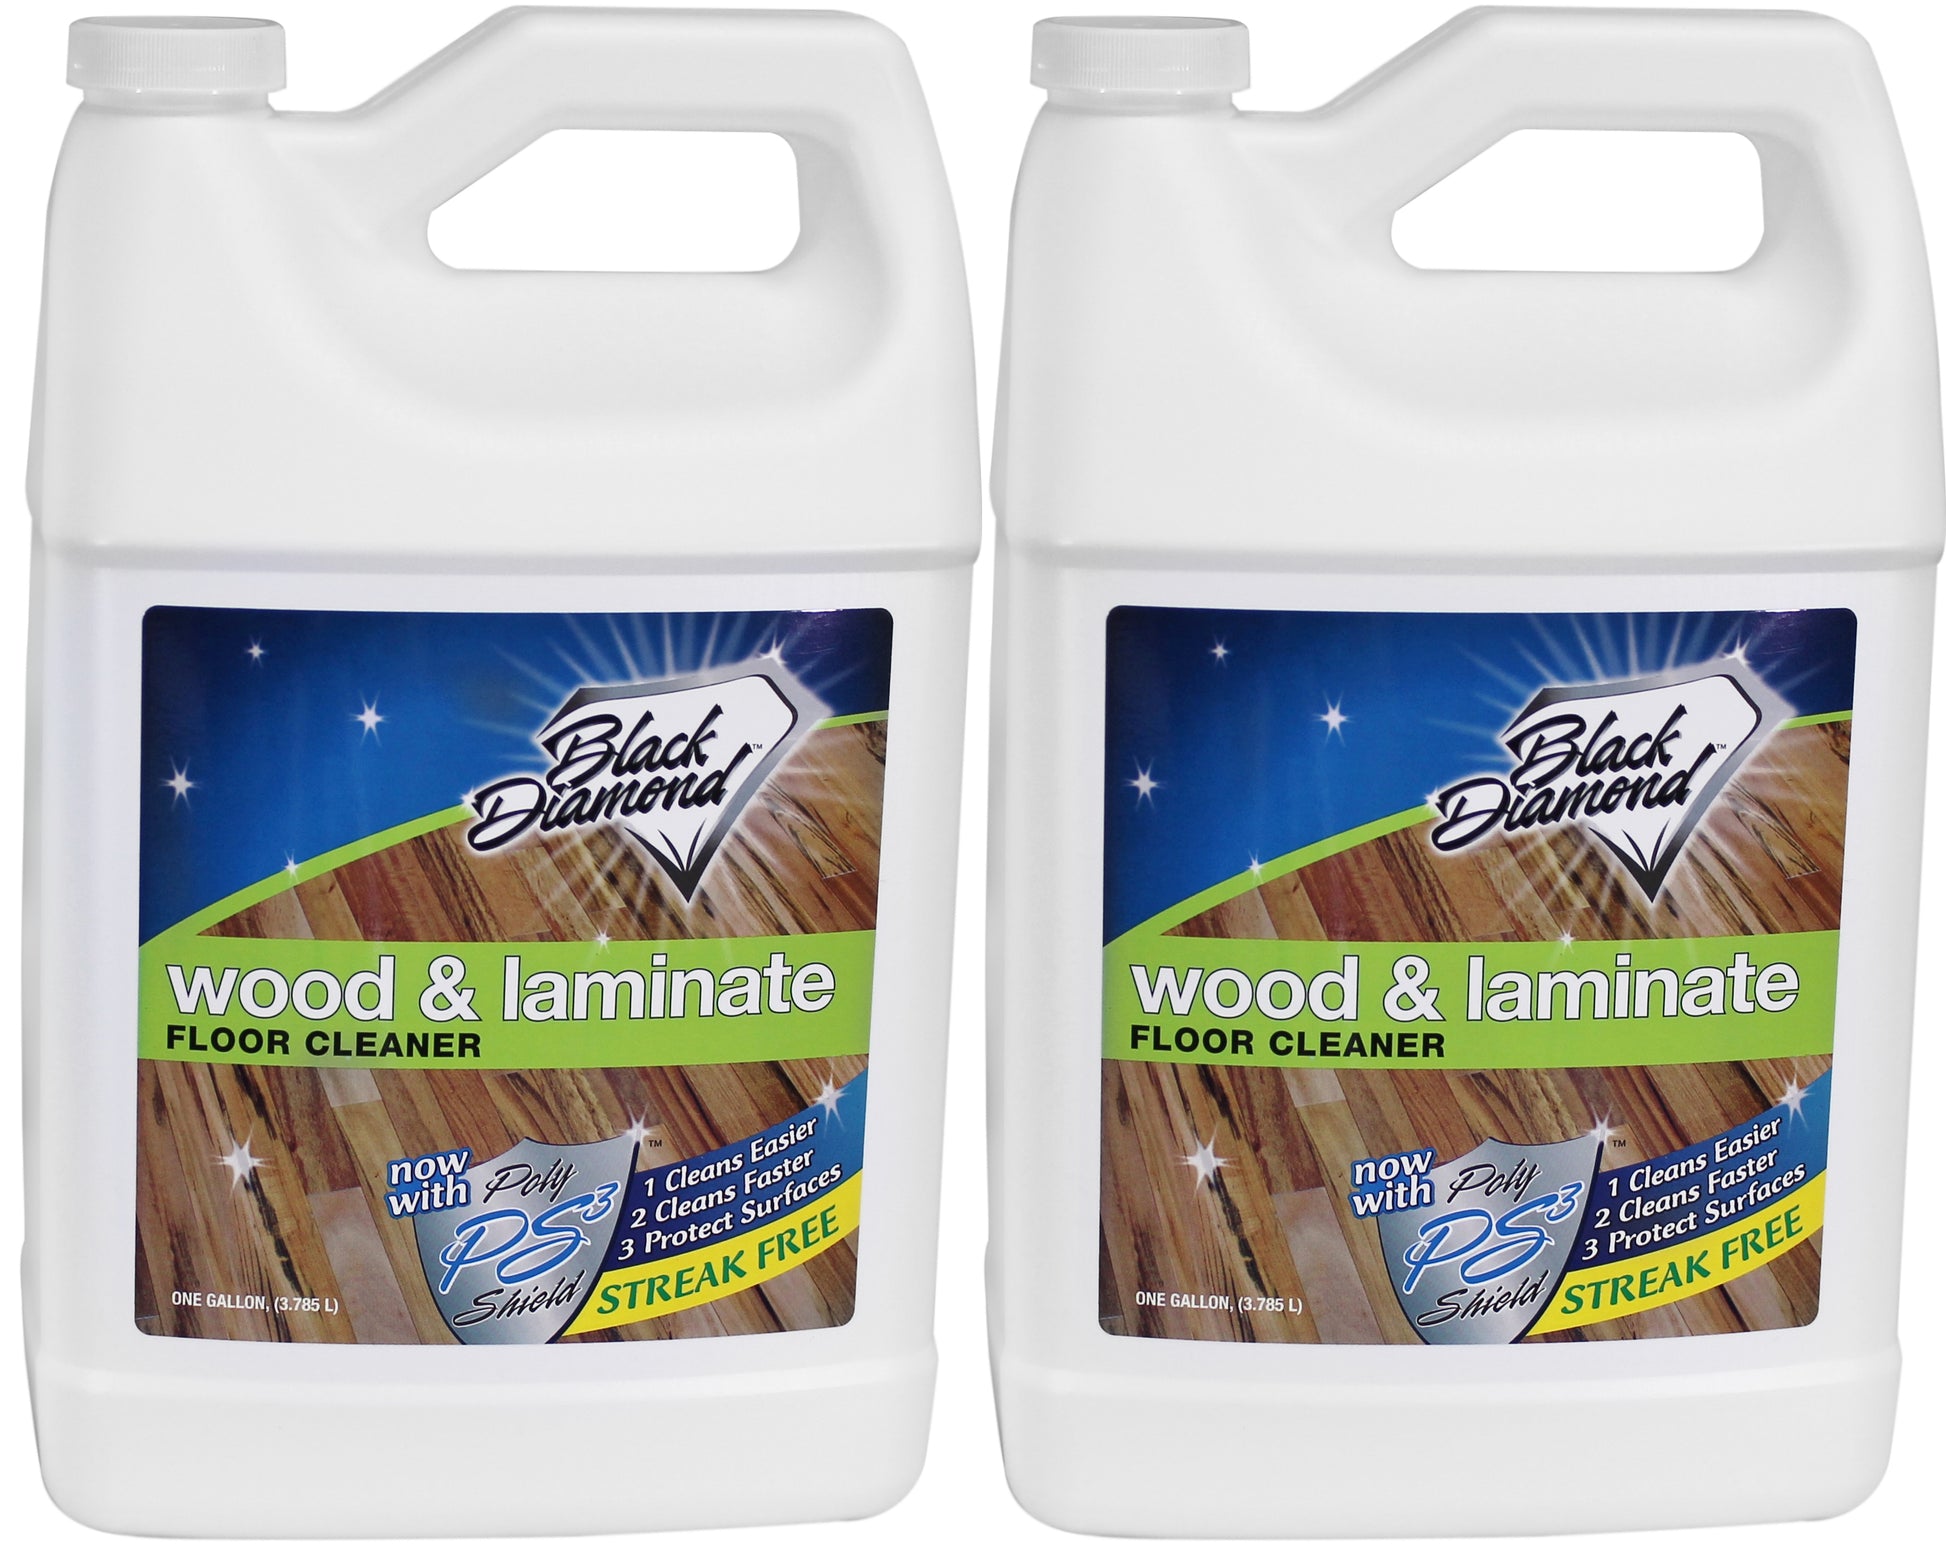 Black Diamond Stoneworks Wood & Laminate Floor Cleaner: For